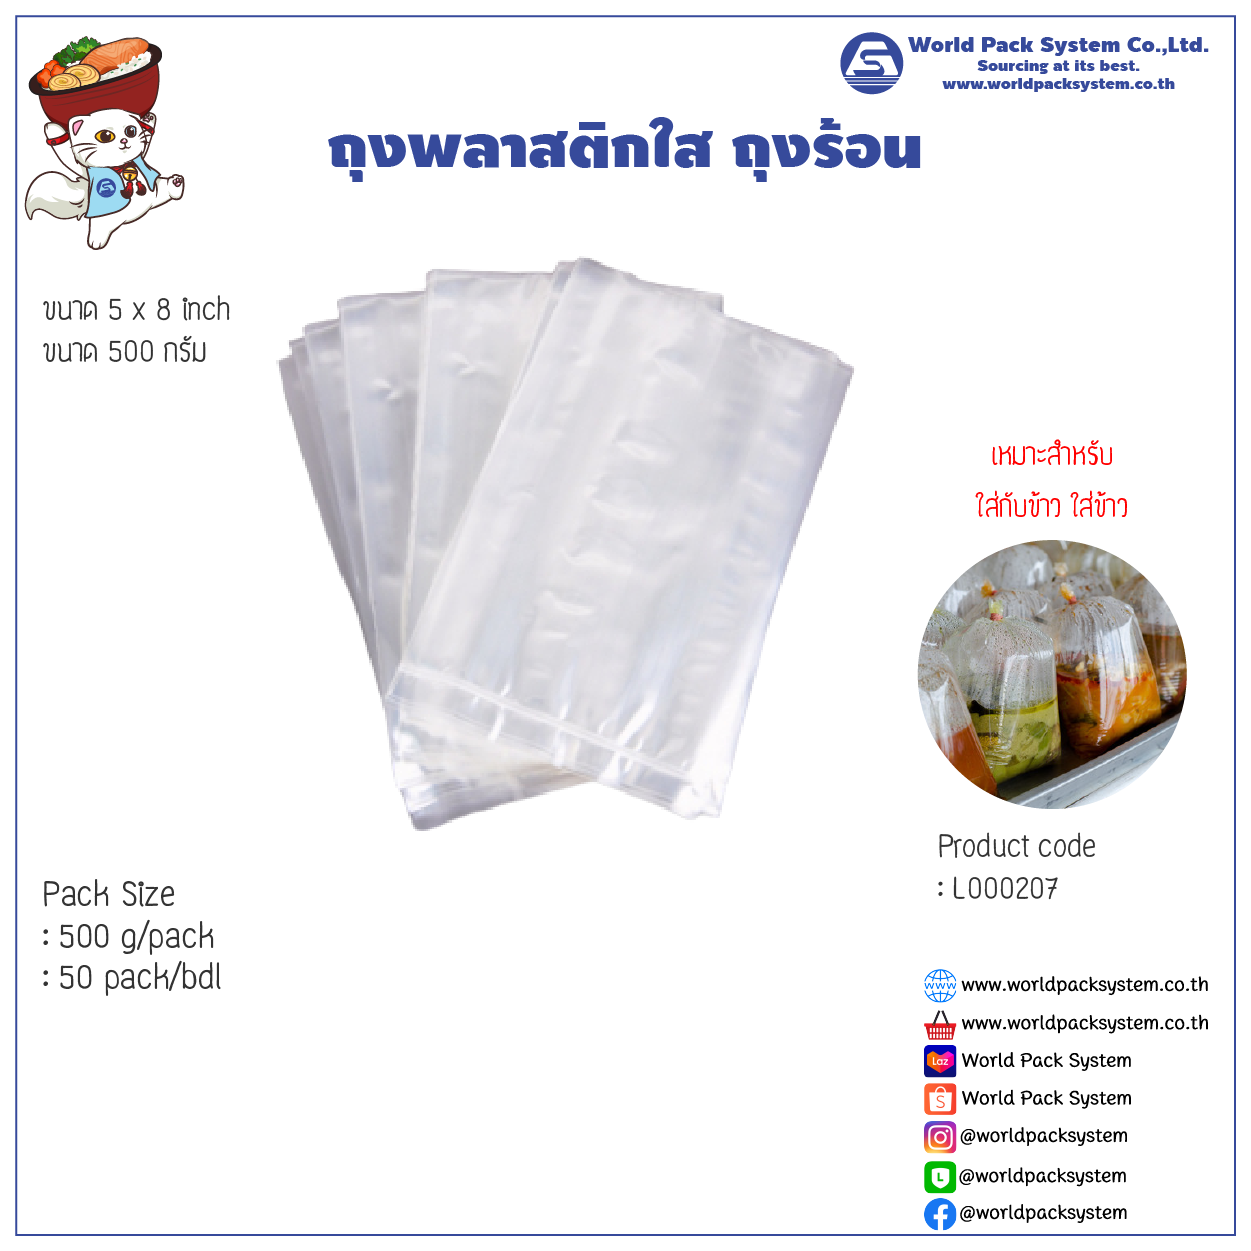 Plastic bag size 5 x 8 inch (500 g)